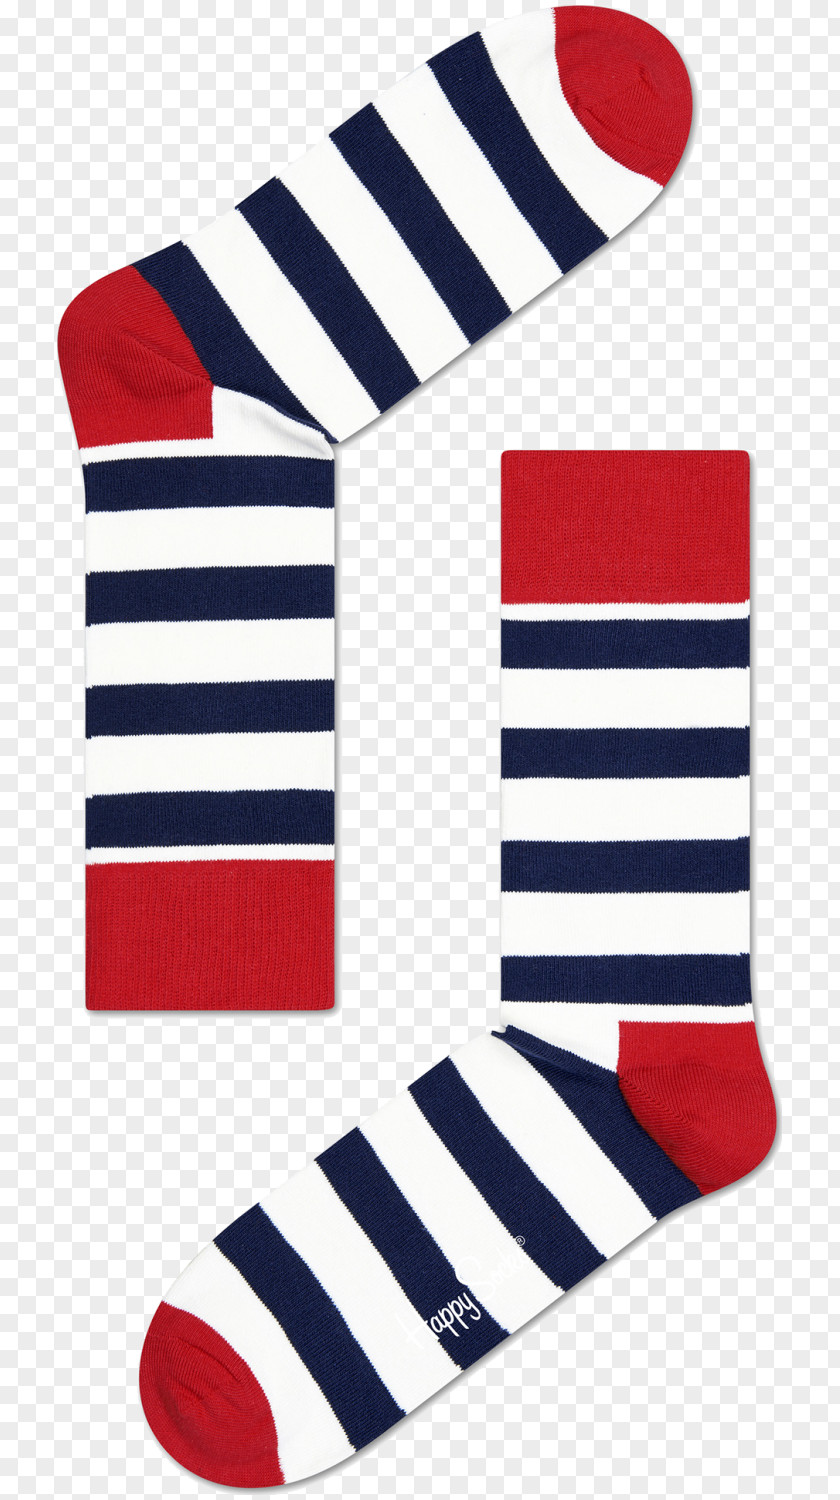 Striped Stockings Sock Shoe Size Clothing Fashion PNG